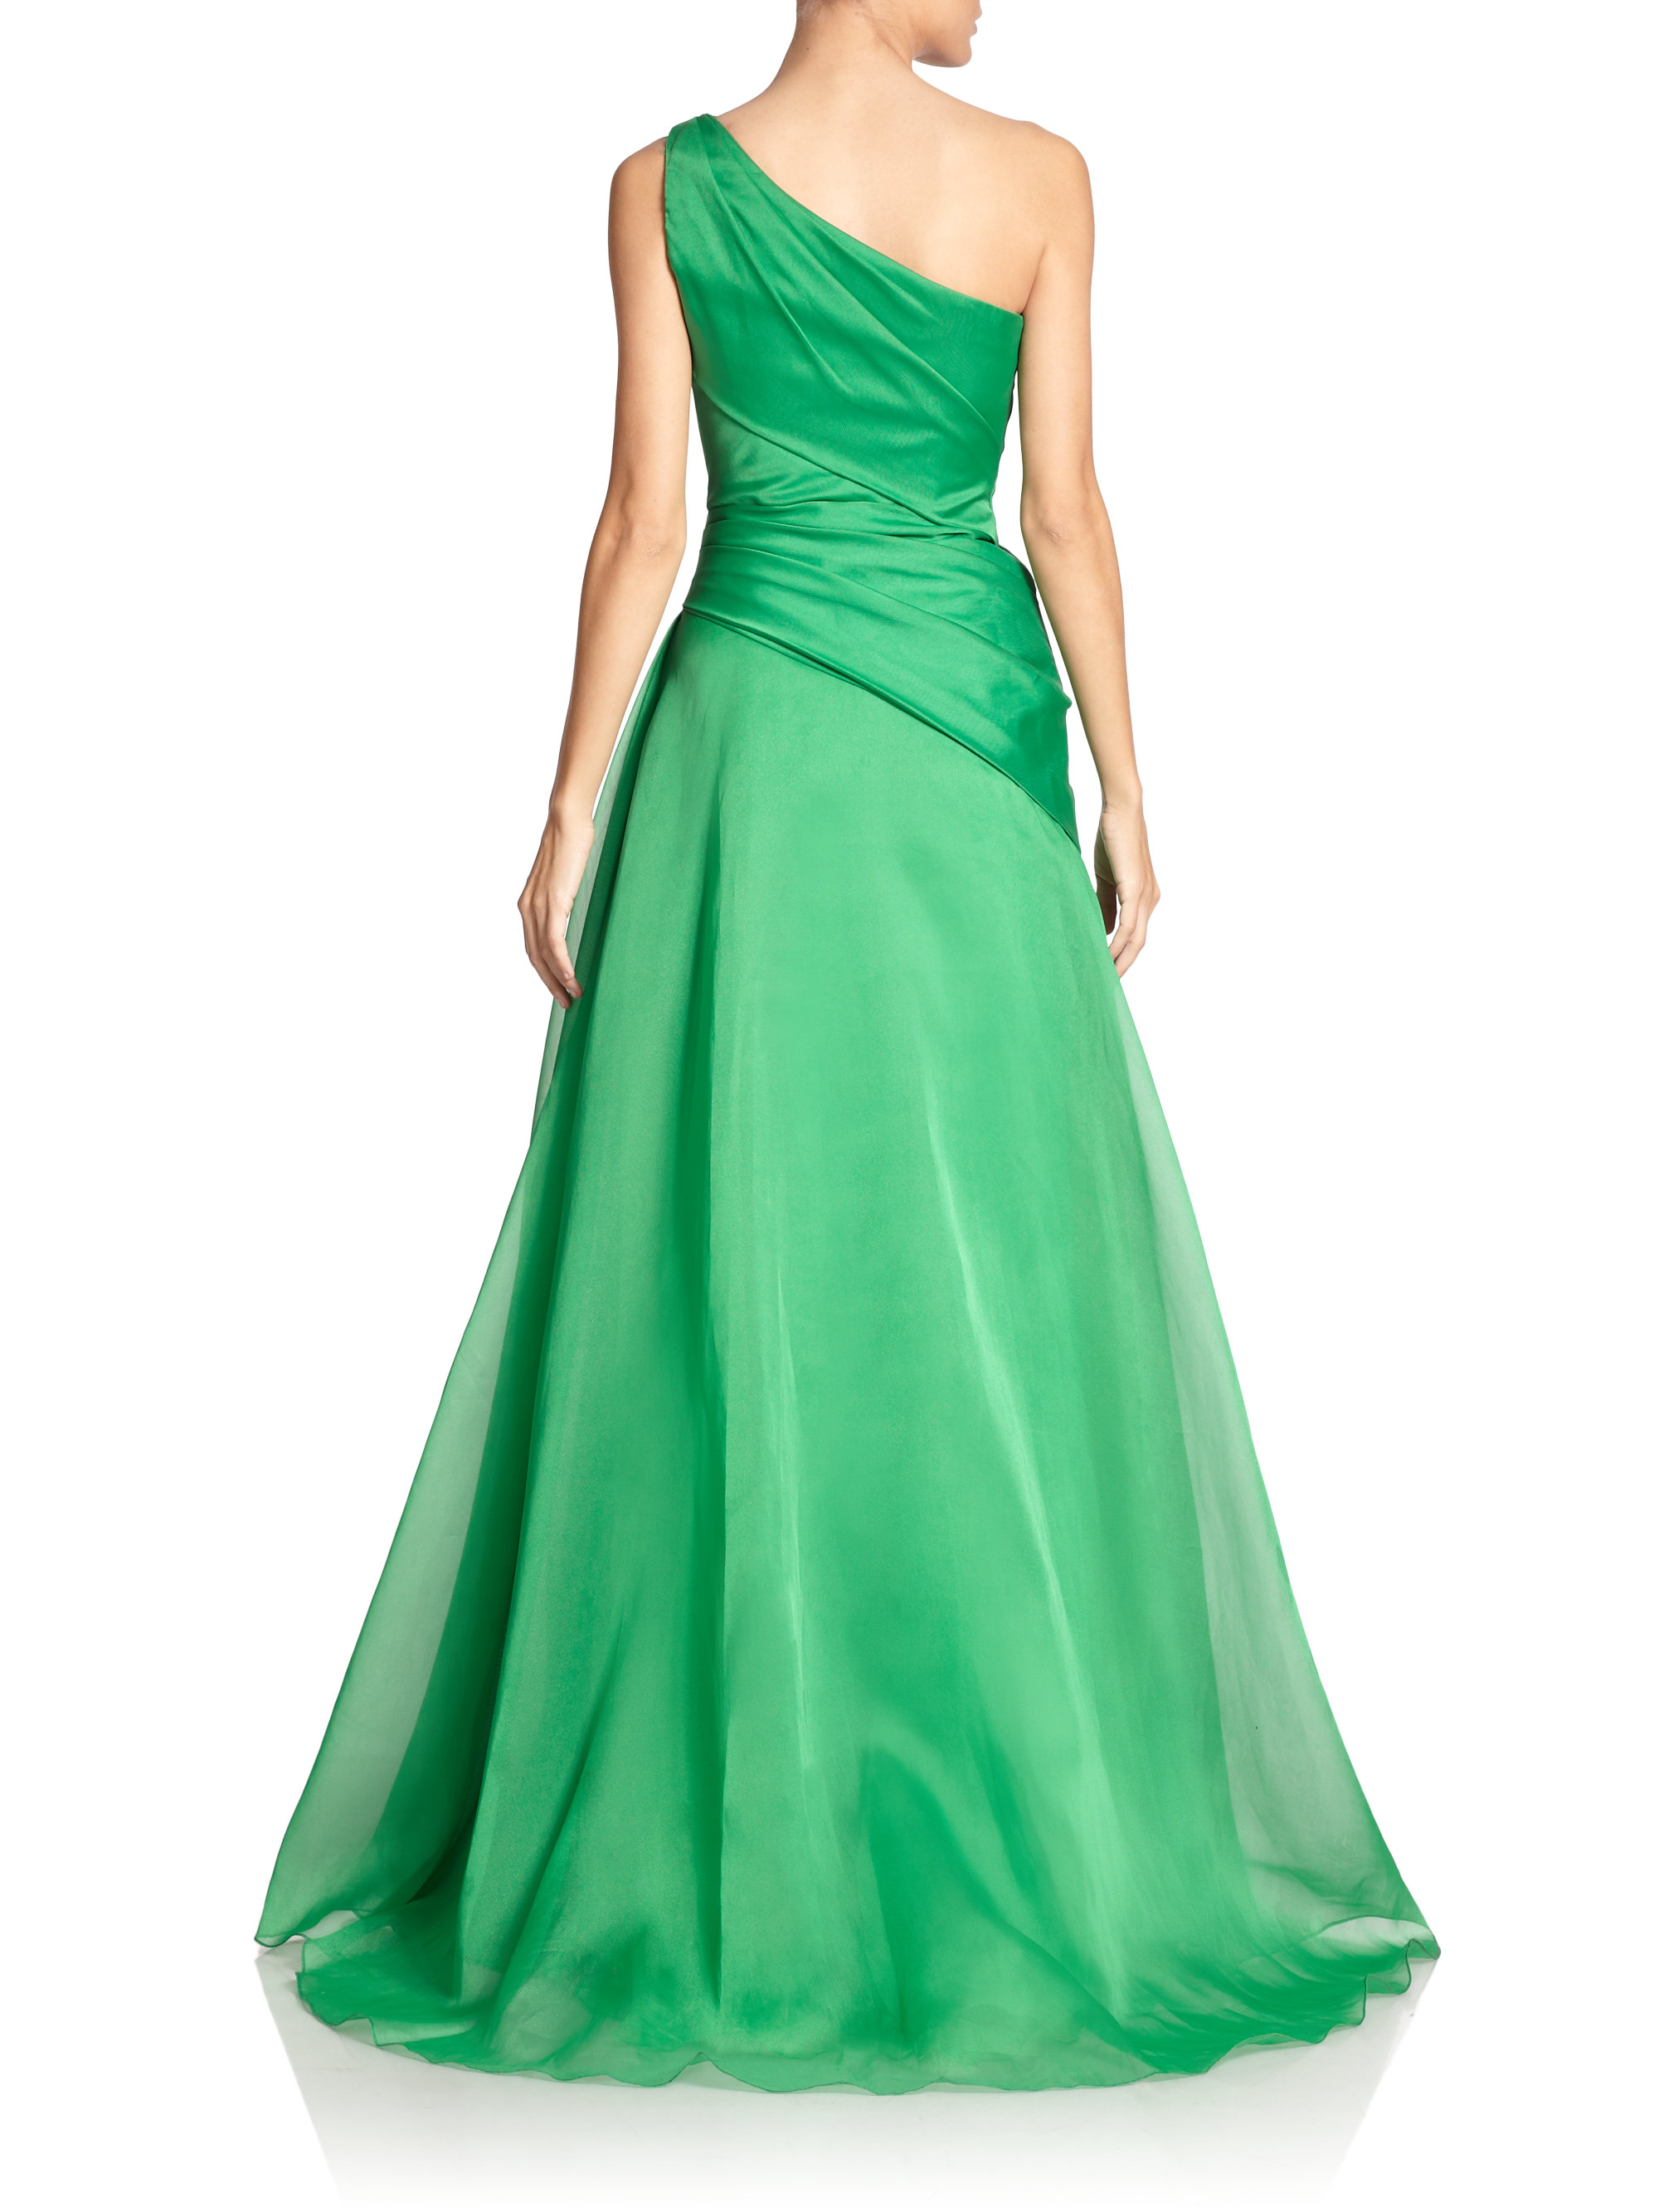 Lyst - Ml monique lhuillier Moire One-shoulder Gown in Green